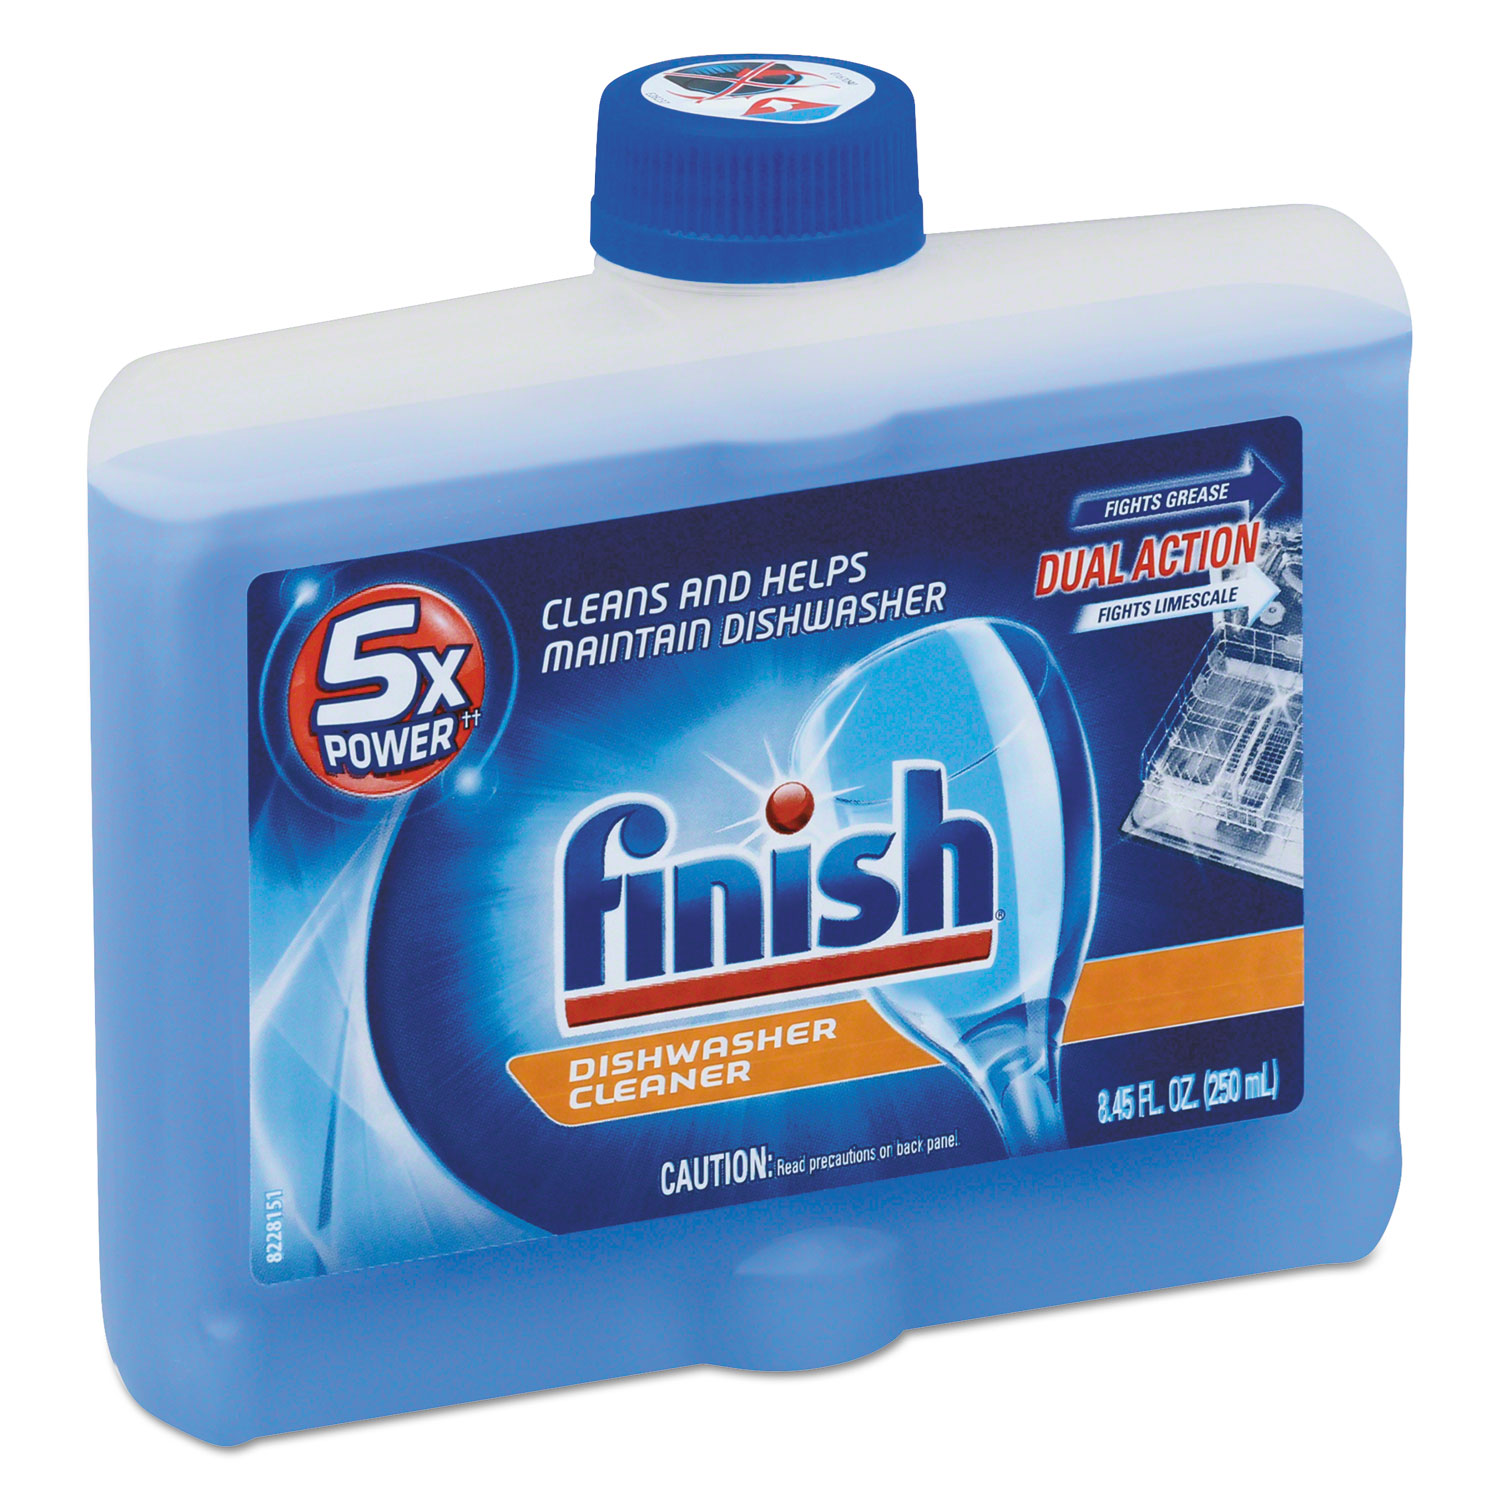 Dishwasher Cleaner, Fresh, 8.45 oz Bottle